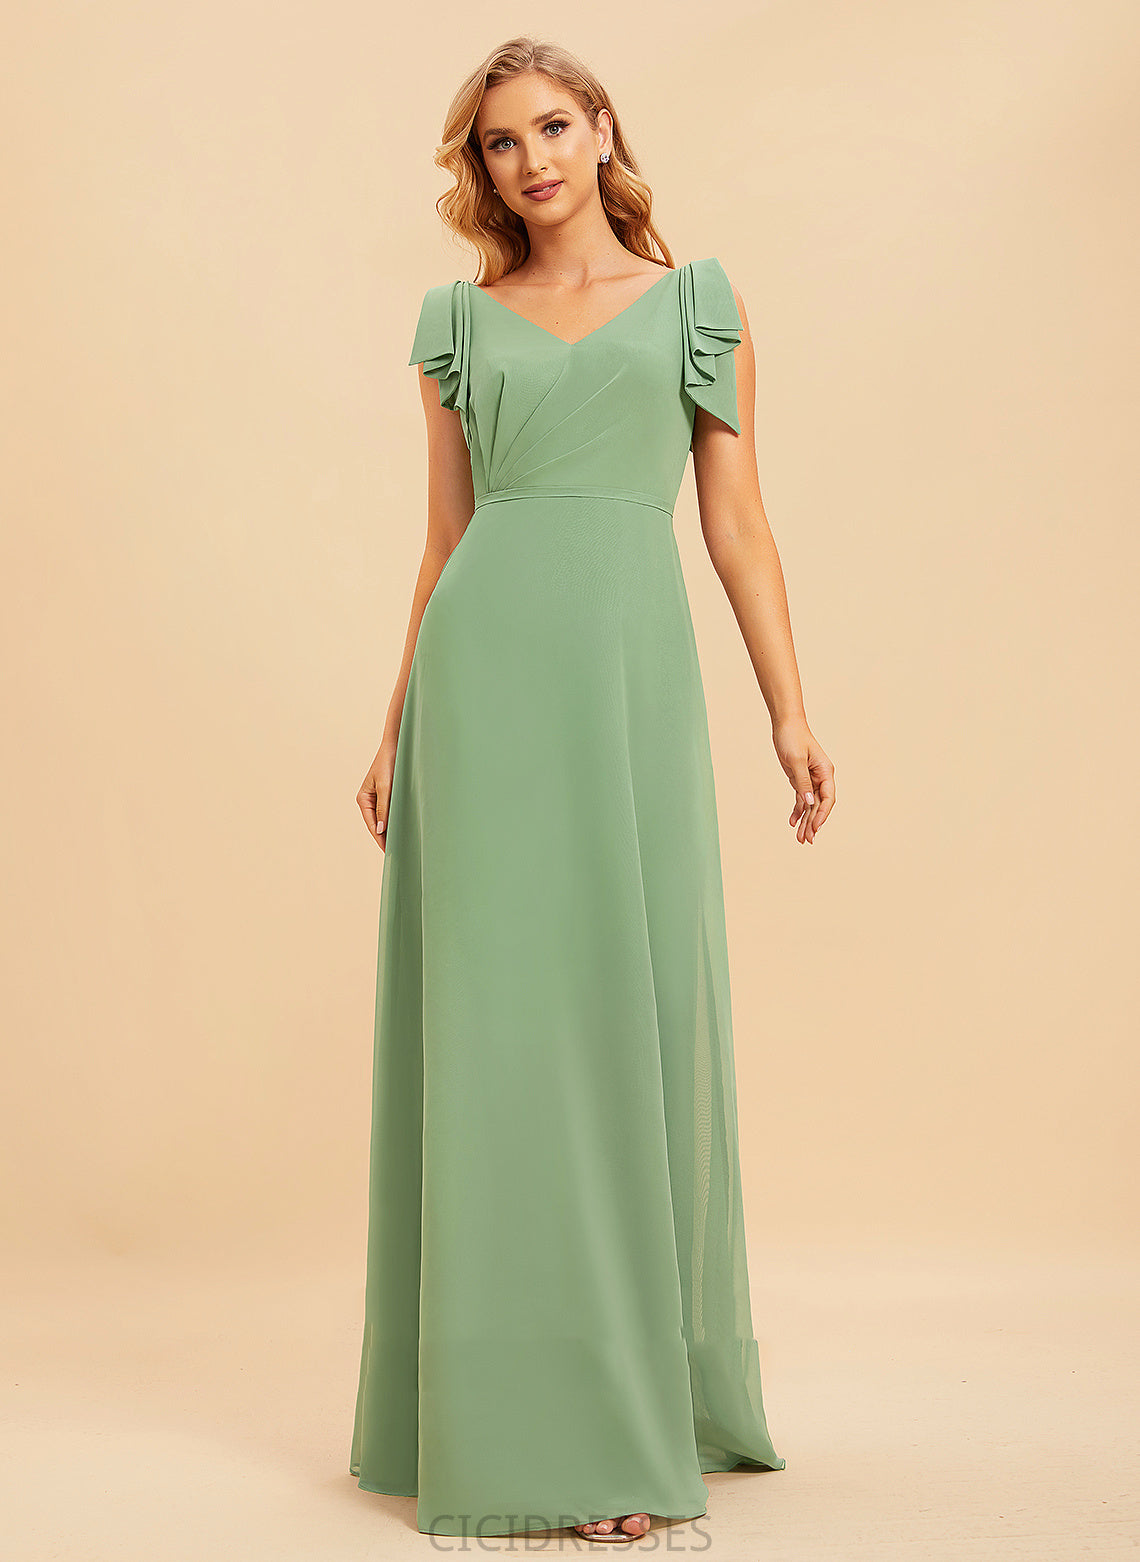 Ruffle Fabric A-Line Embellishment Neckline V-neck Floor-Length Silhouette Length Gloria Floor Length Sleeveless Bridesmaid Dresses